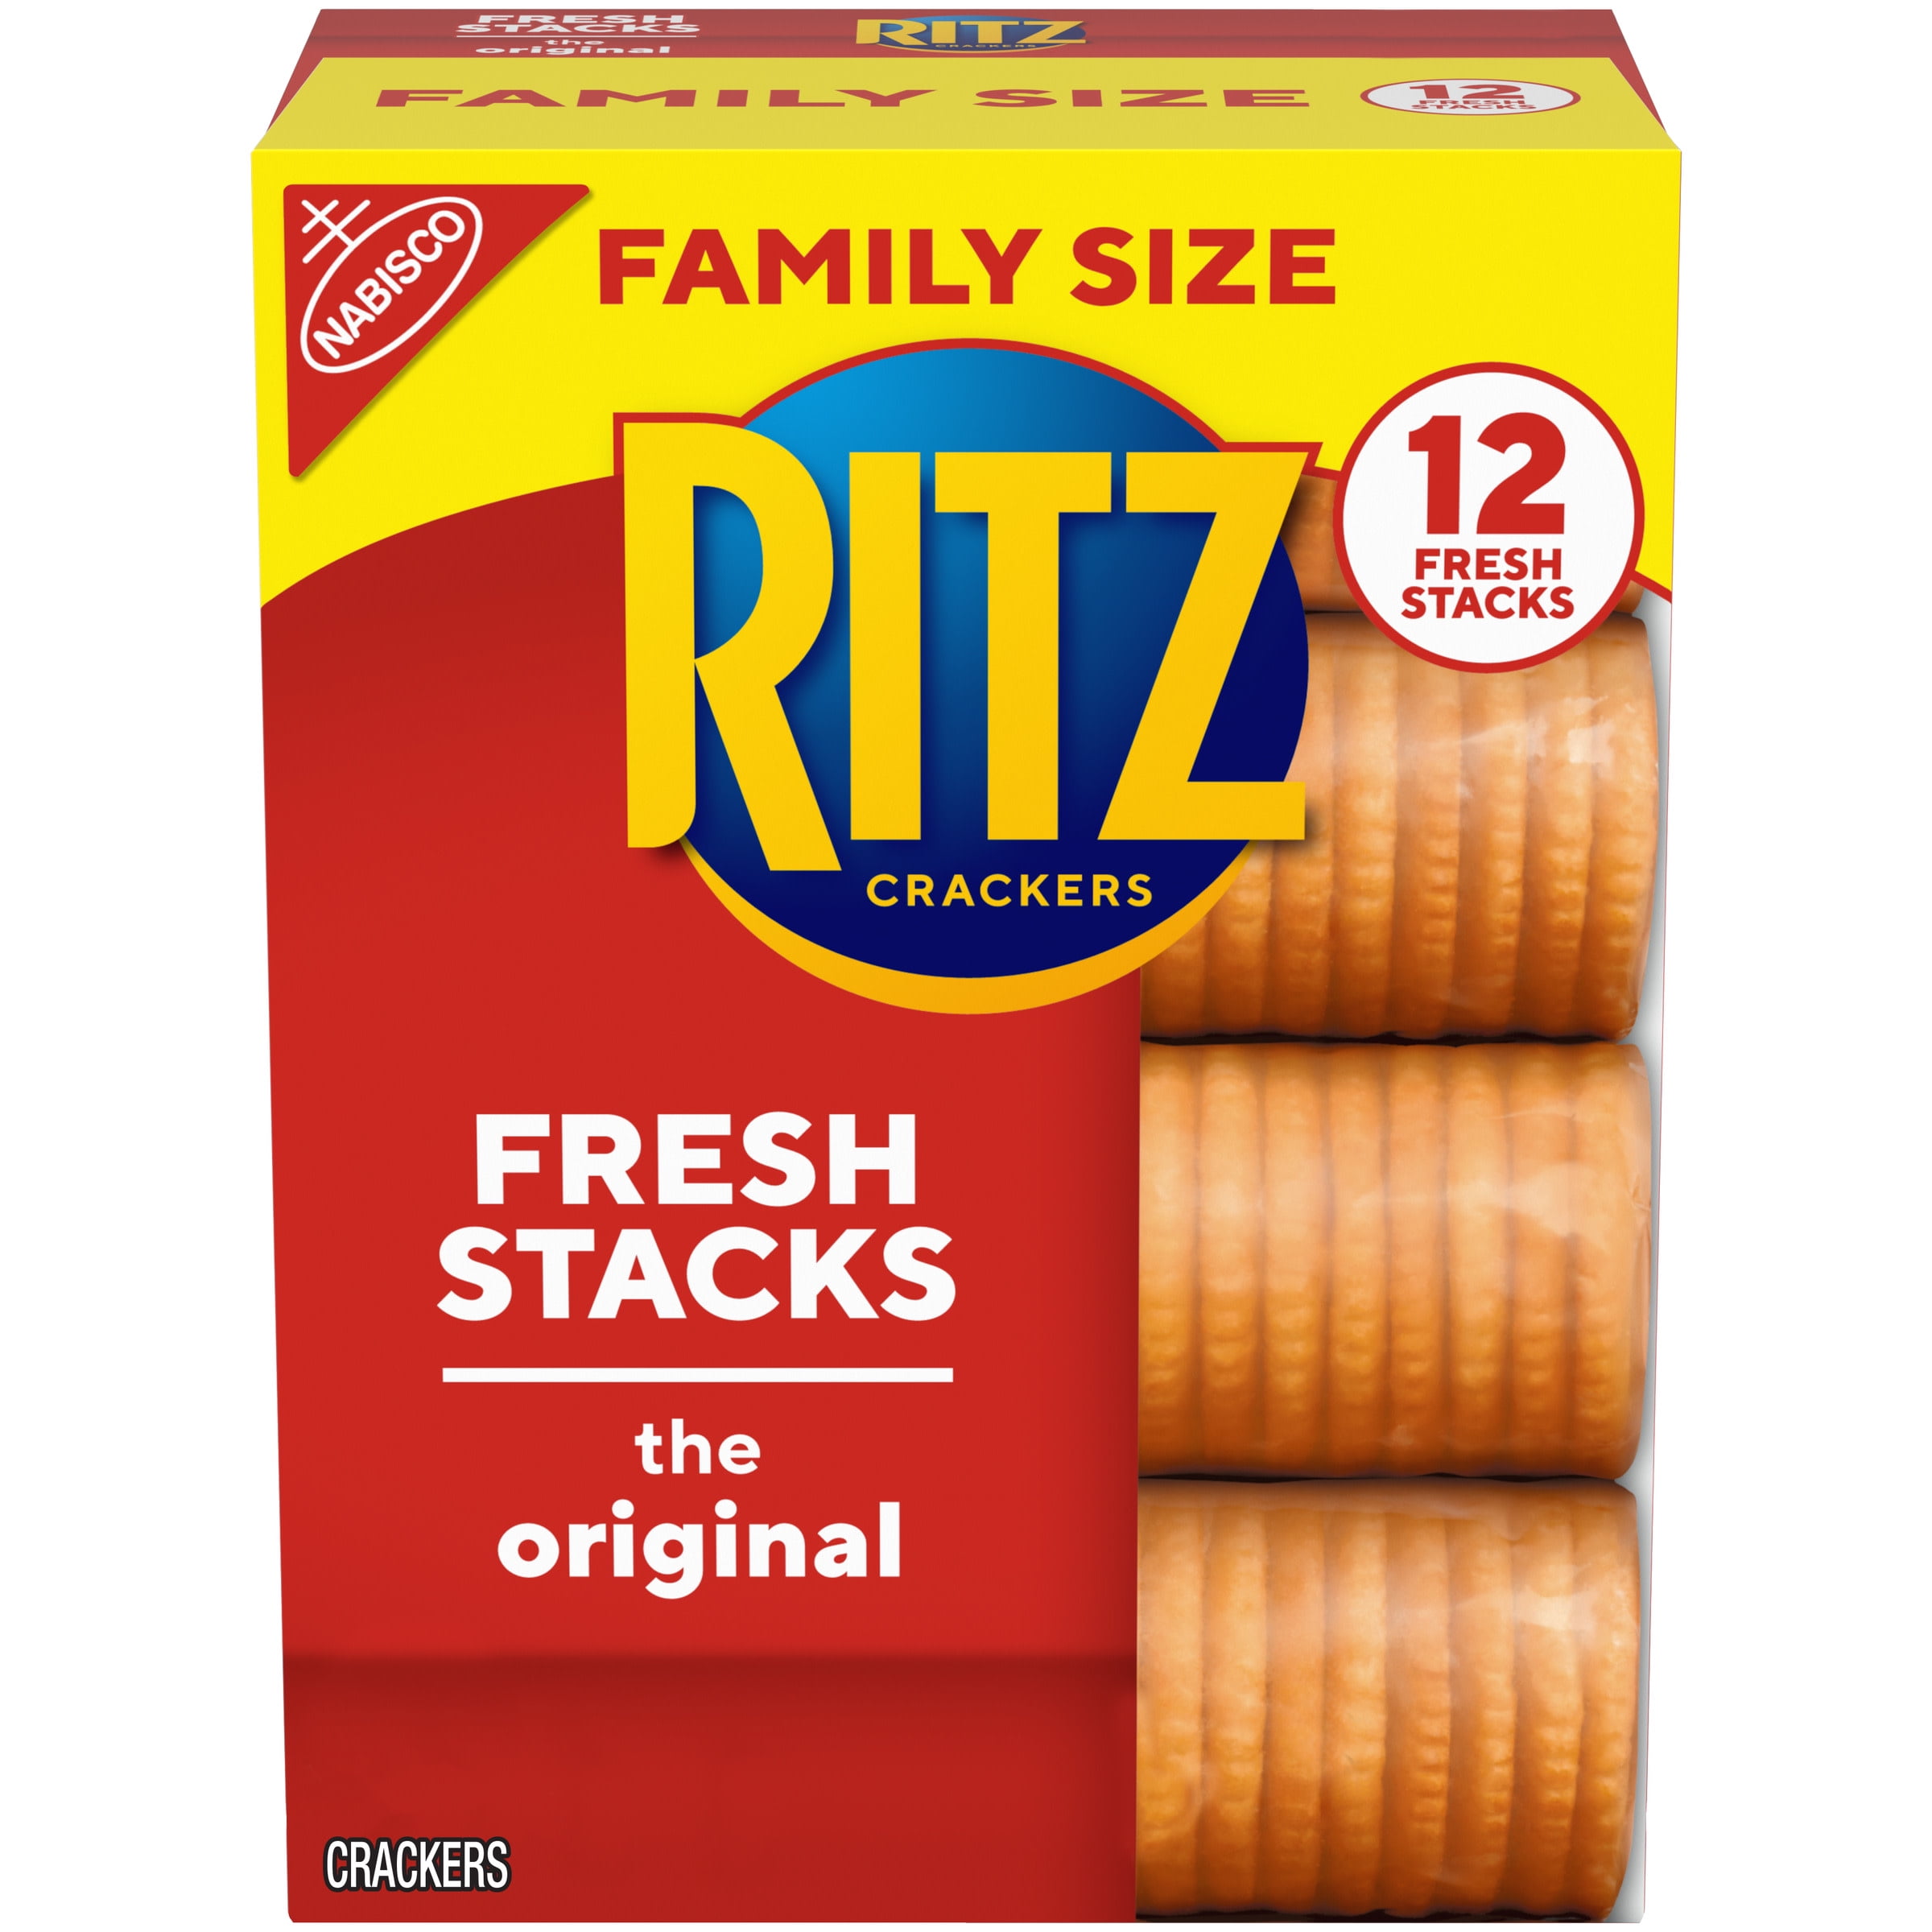 RITZ Fresh Stacks Original Crackers, Family Size, 17.8 oz